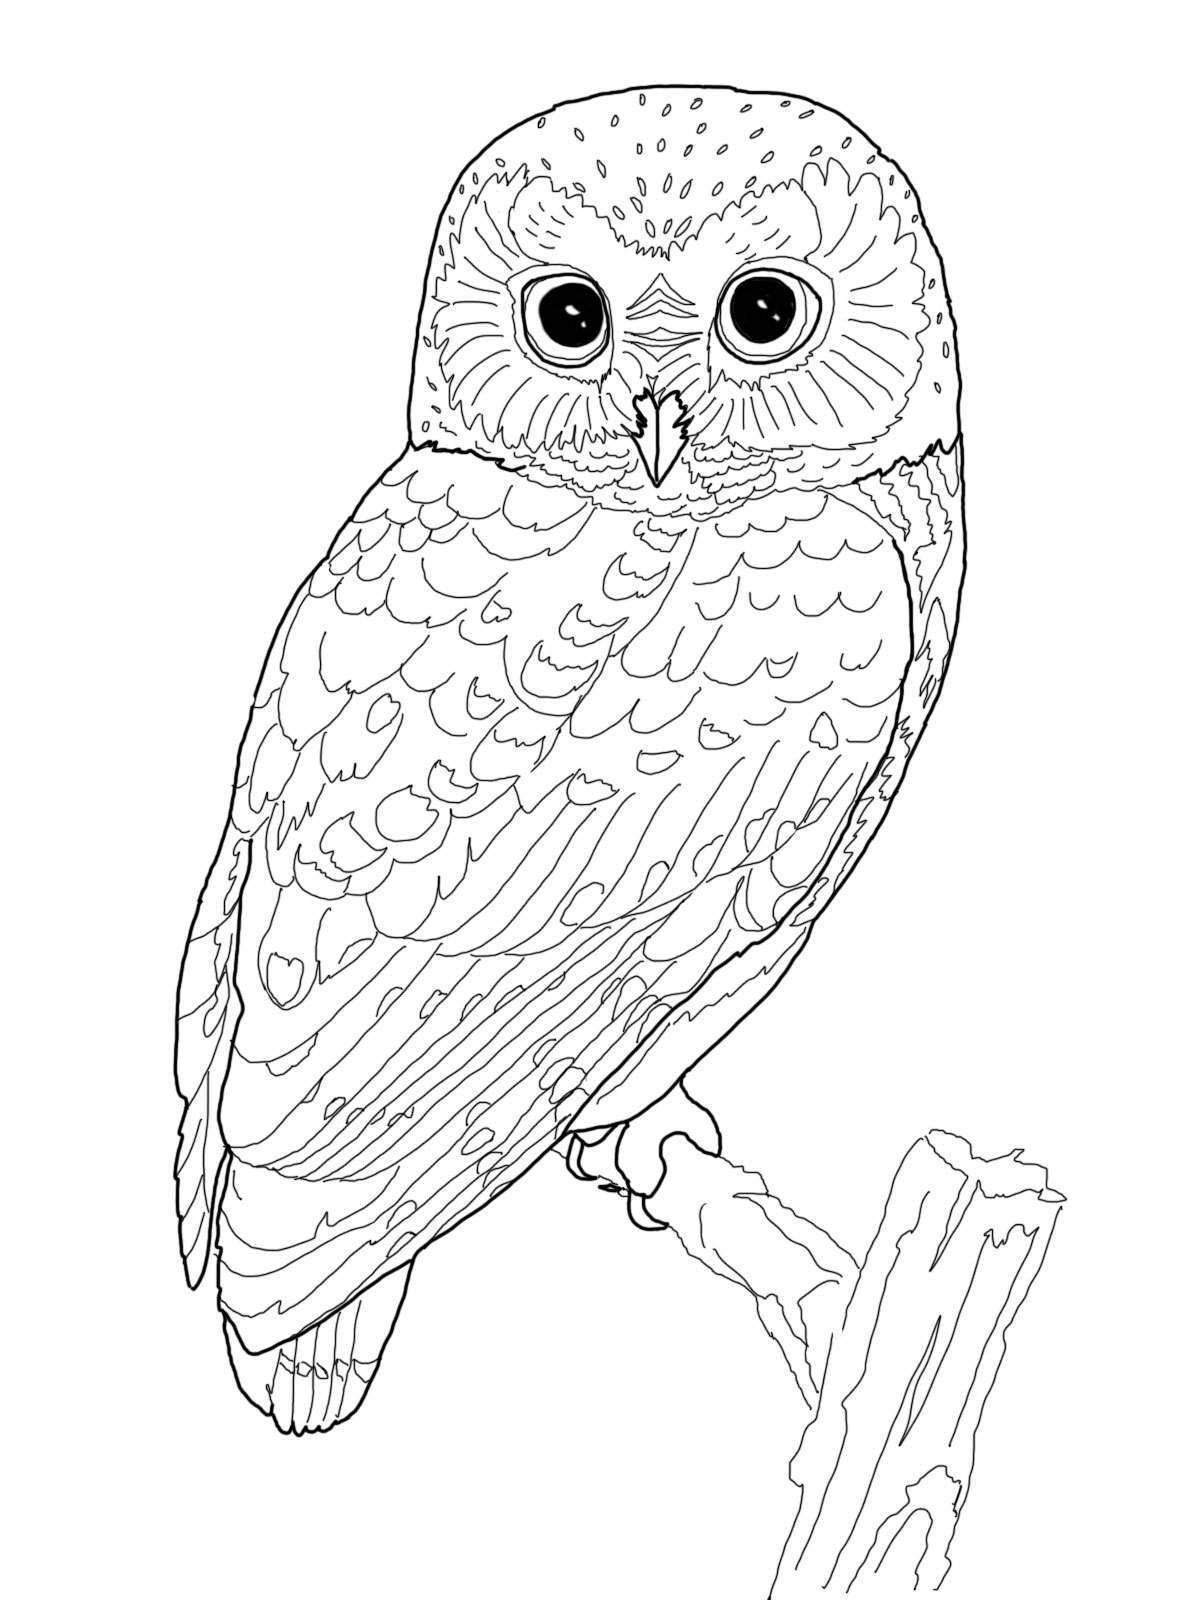 Fun owl coloring book for kids